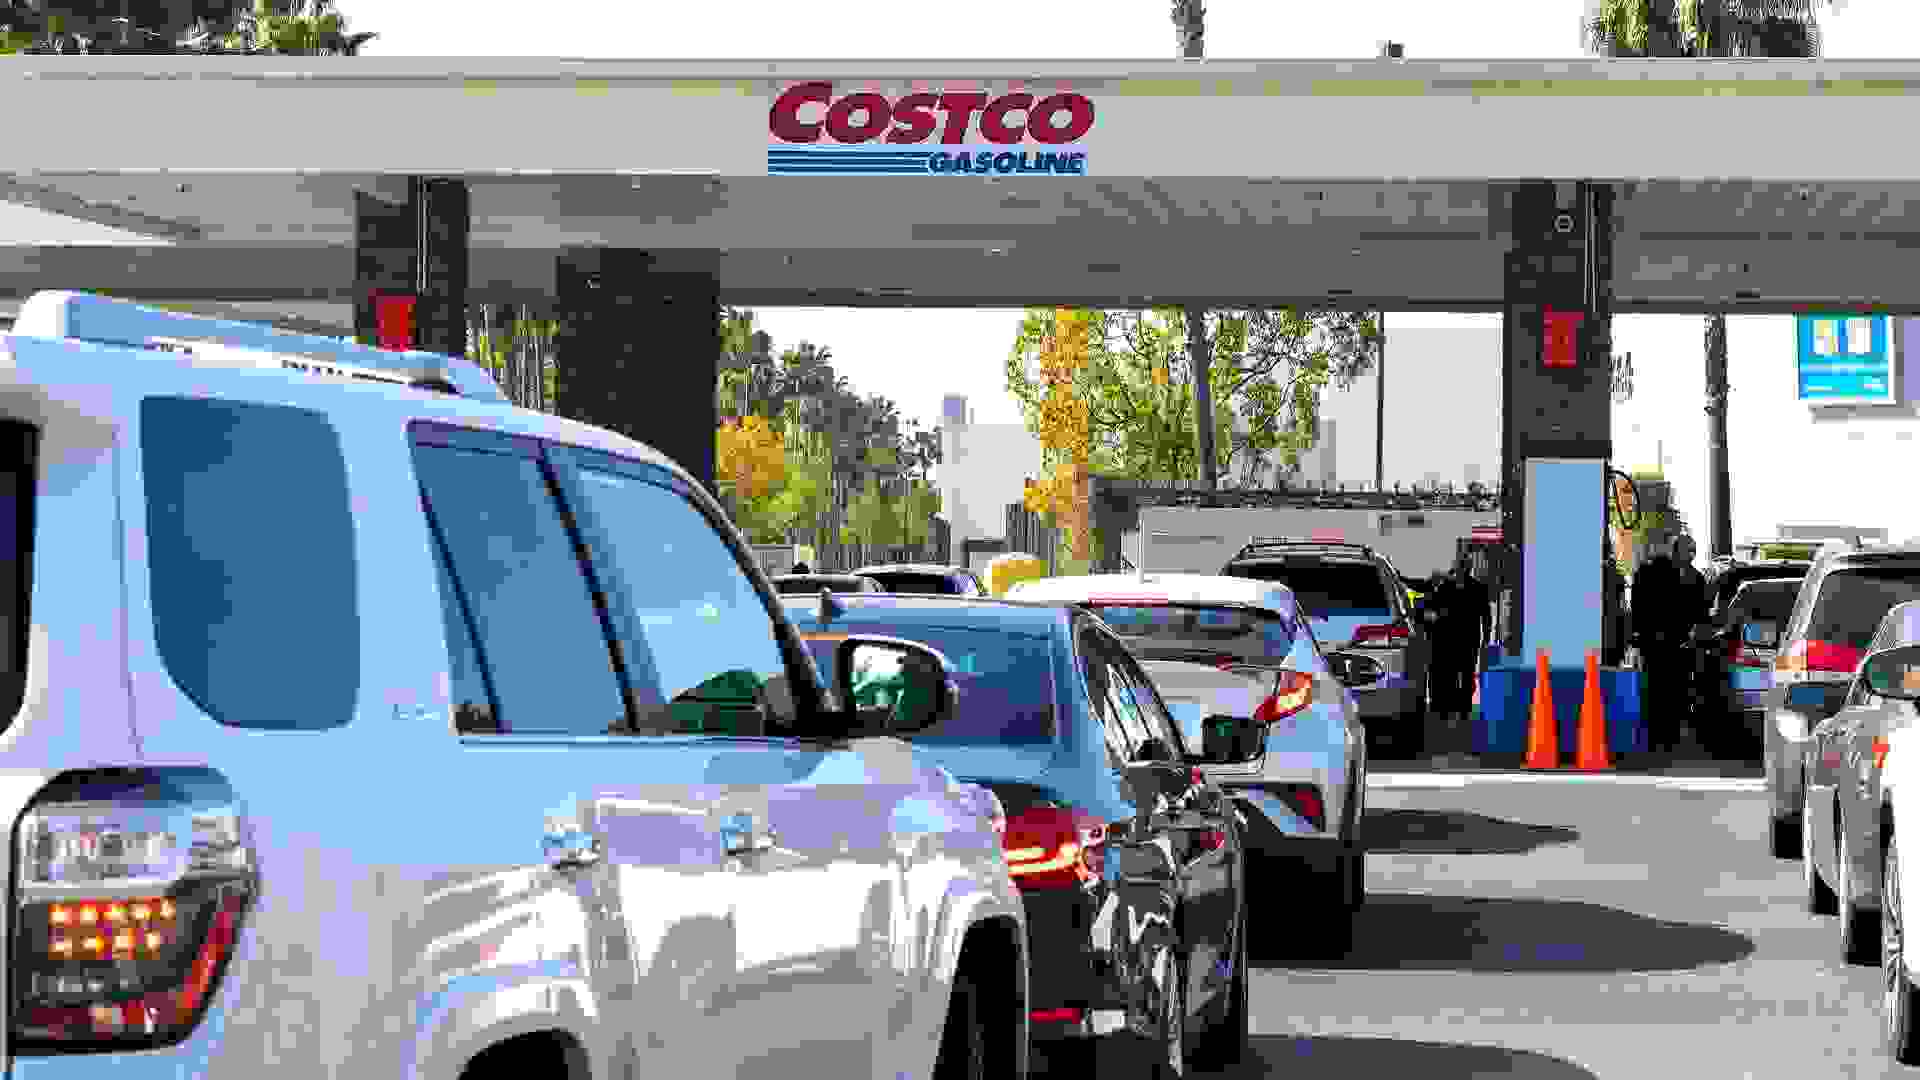 Costco Gas Station stock photo